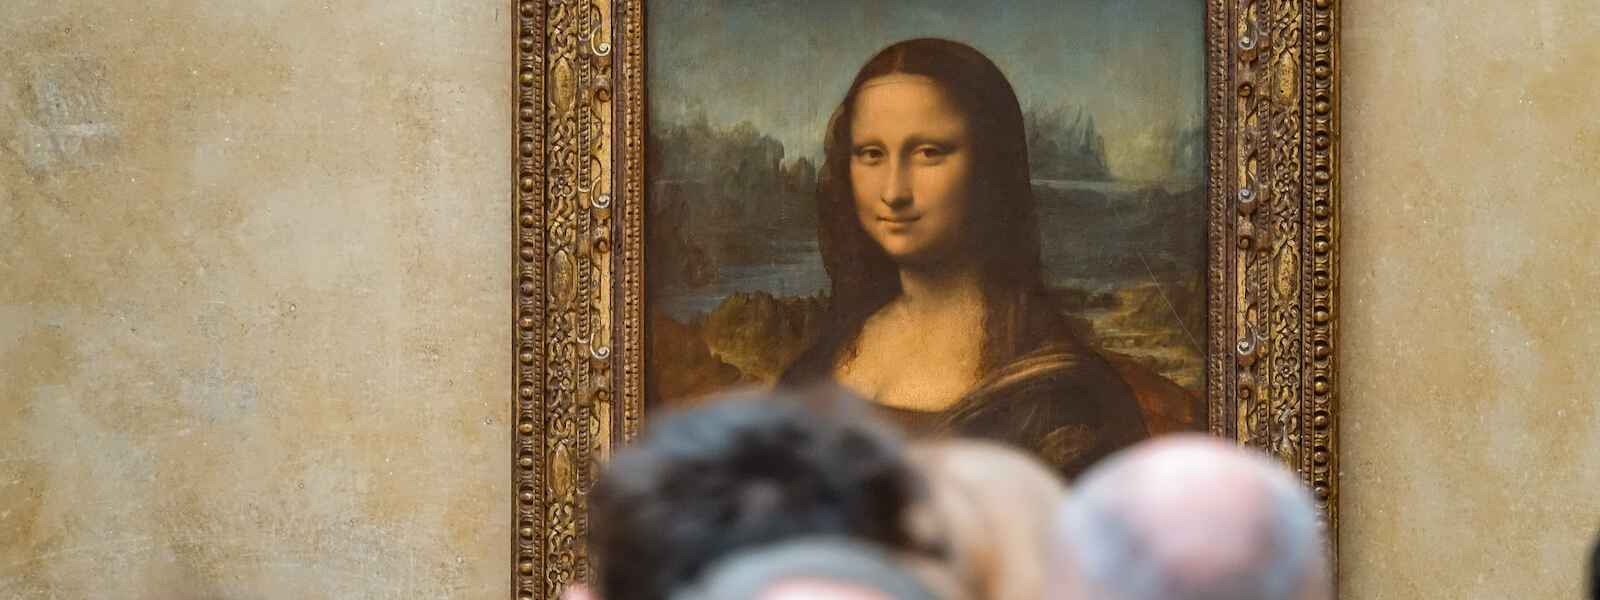 The backs of heads in front of Da Vinci's "Mona Lisa"